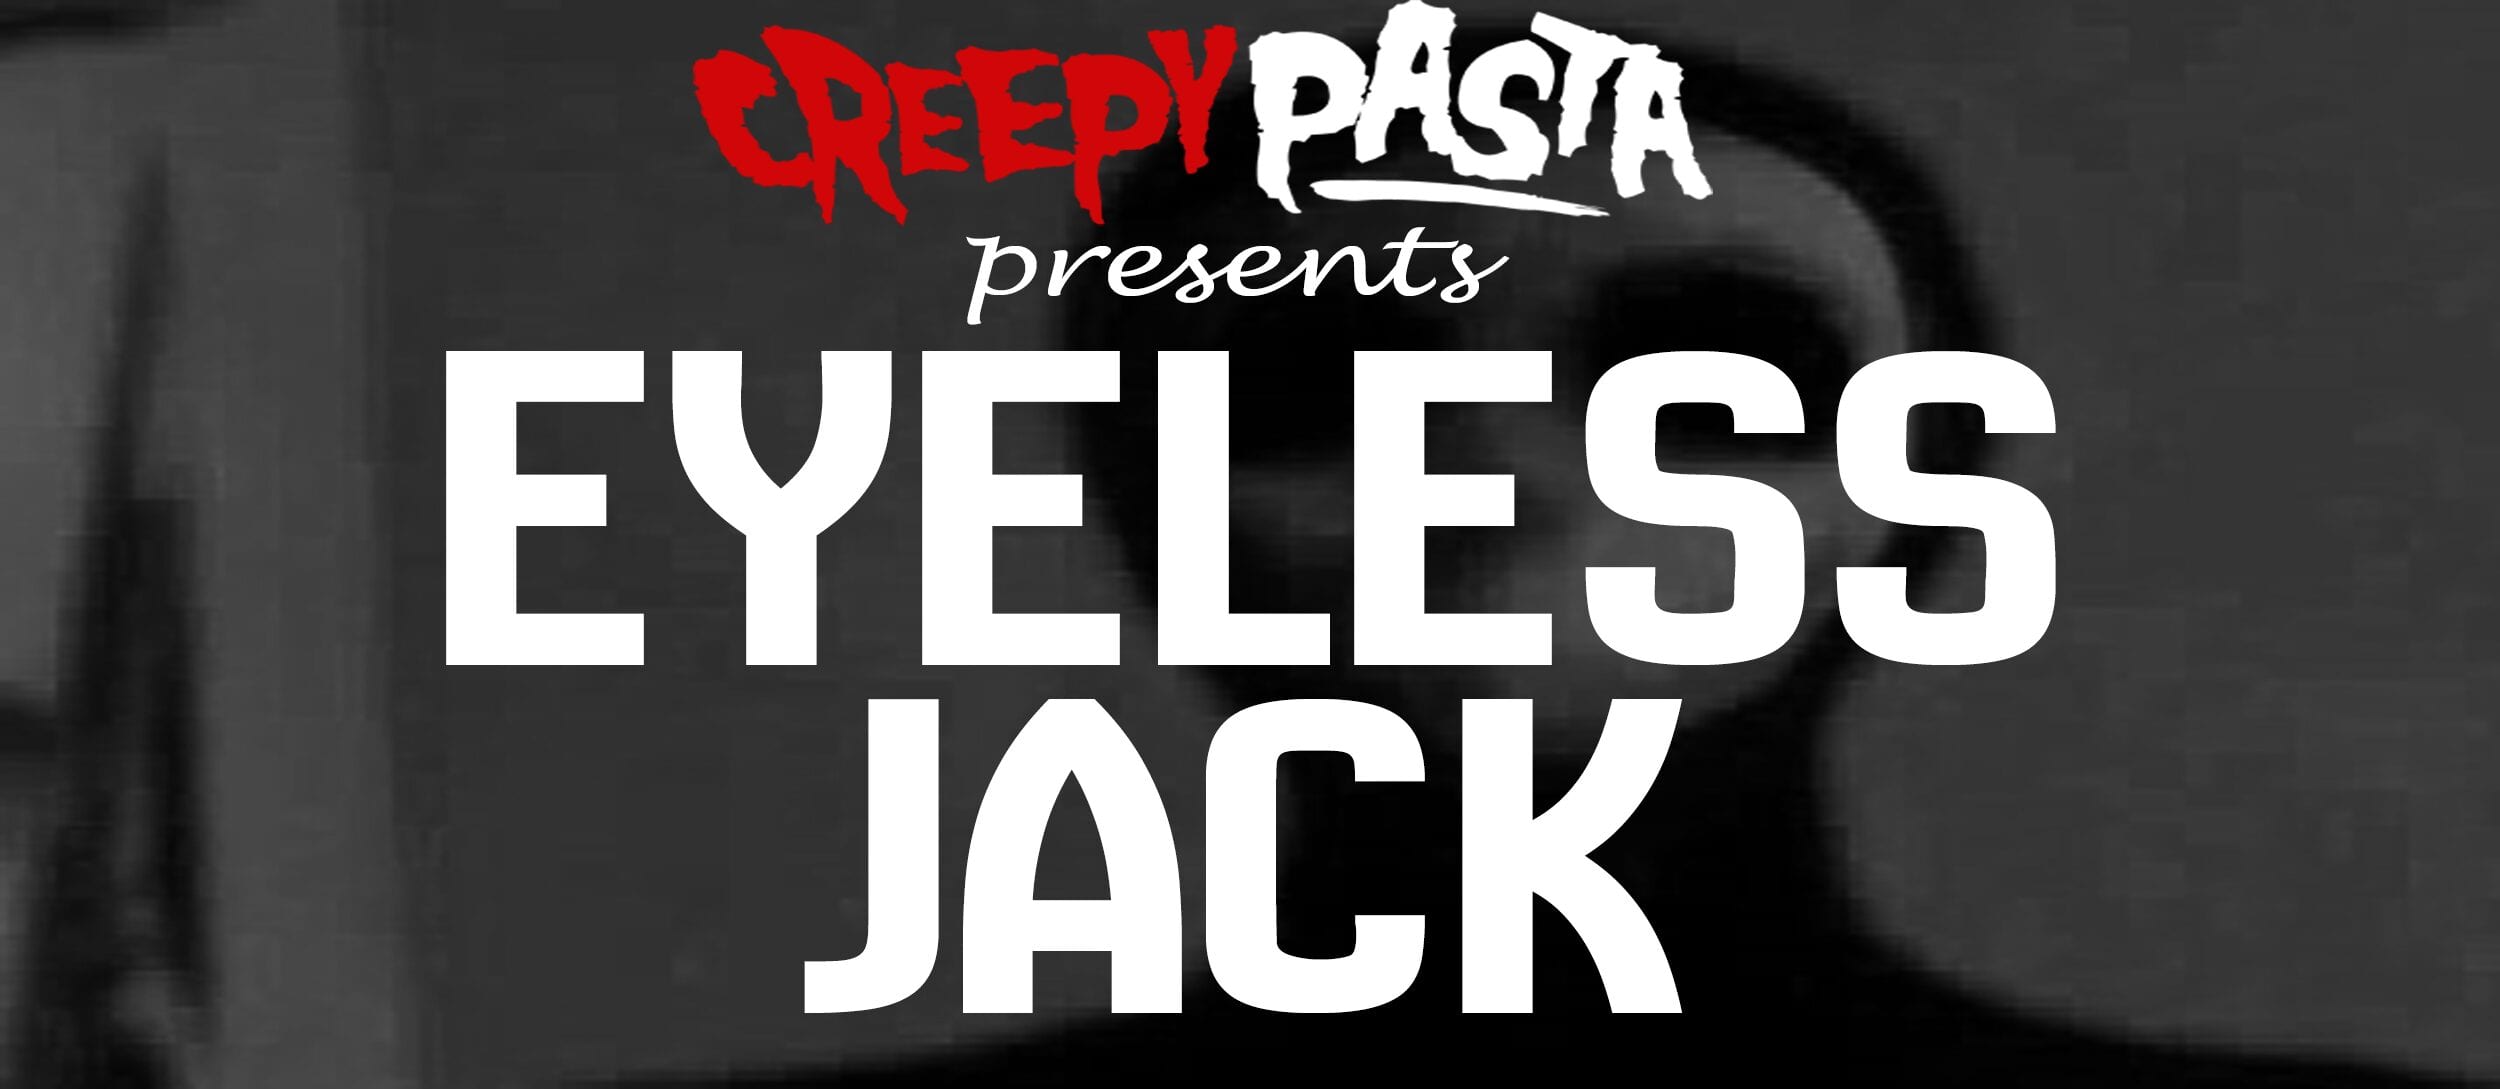 Eyeless Jack - Creepypasta